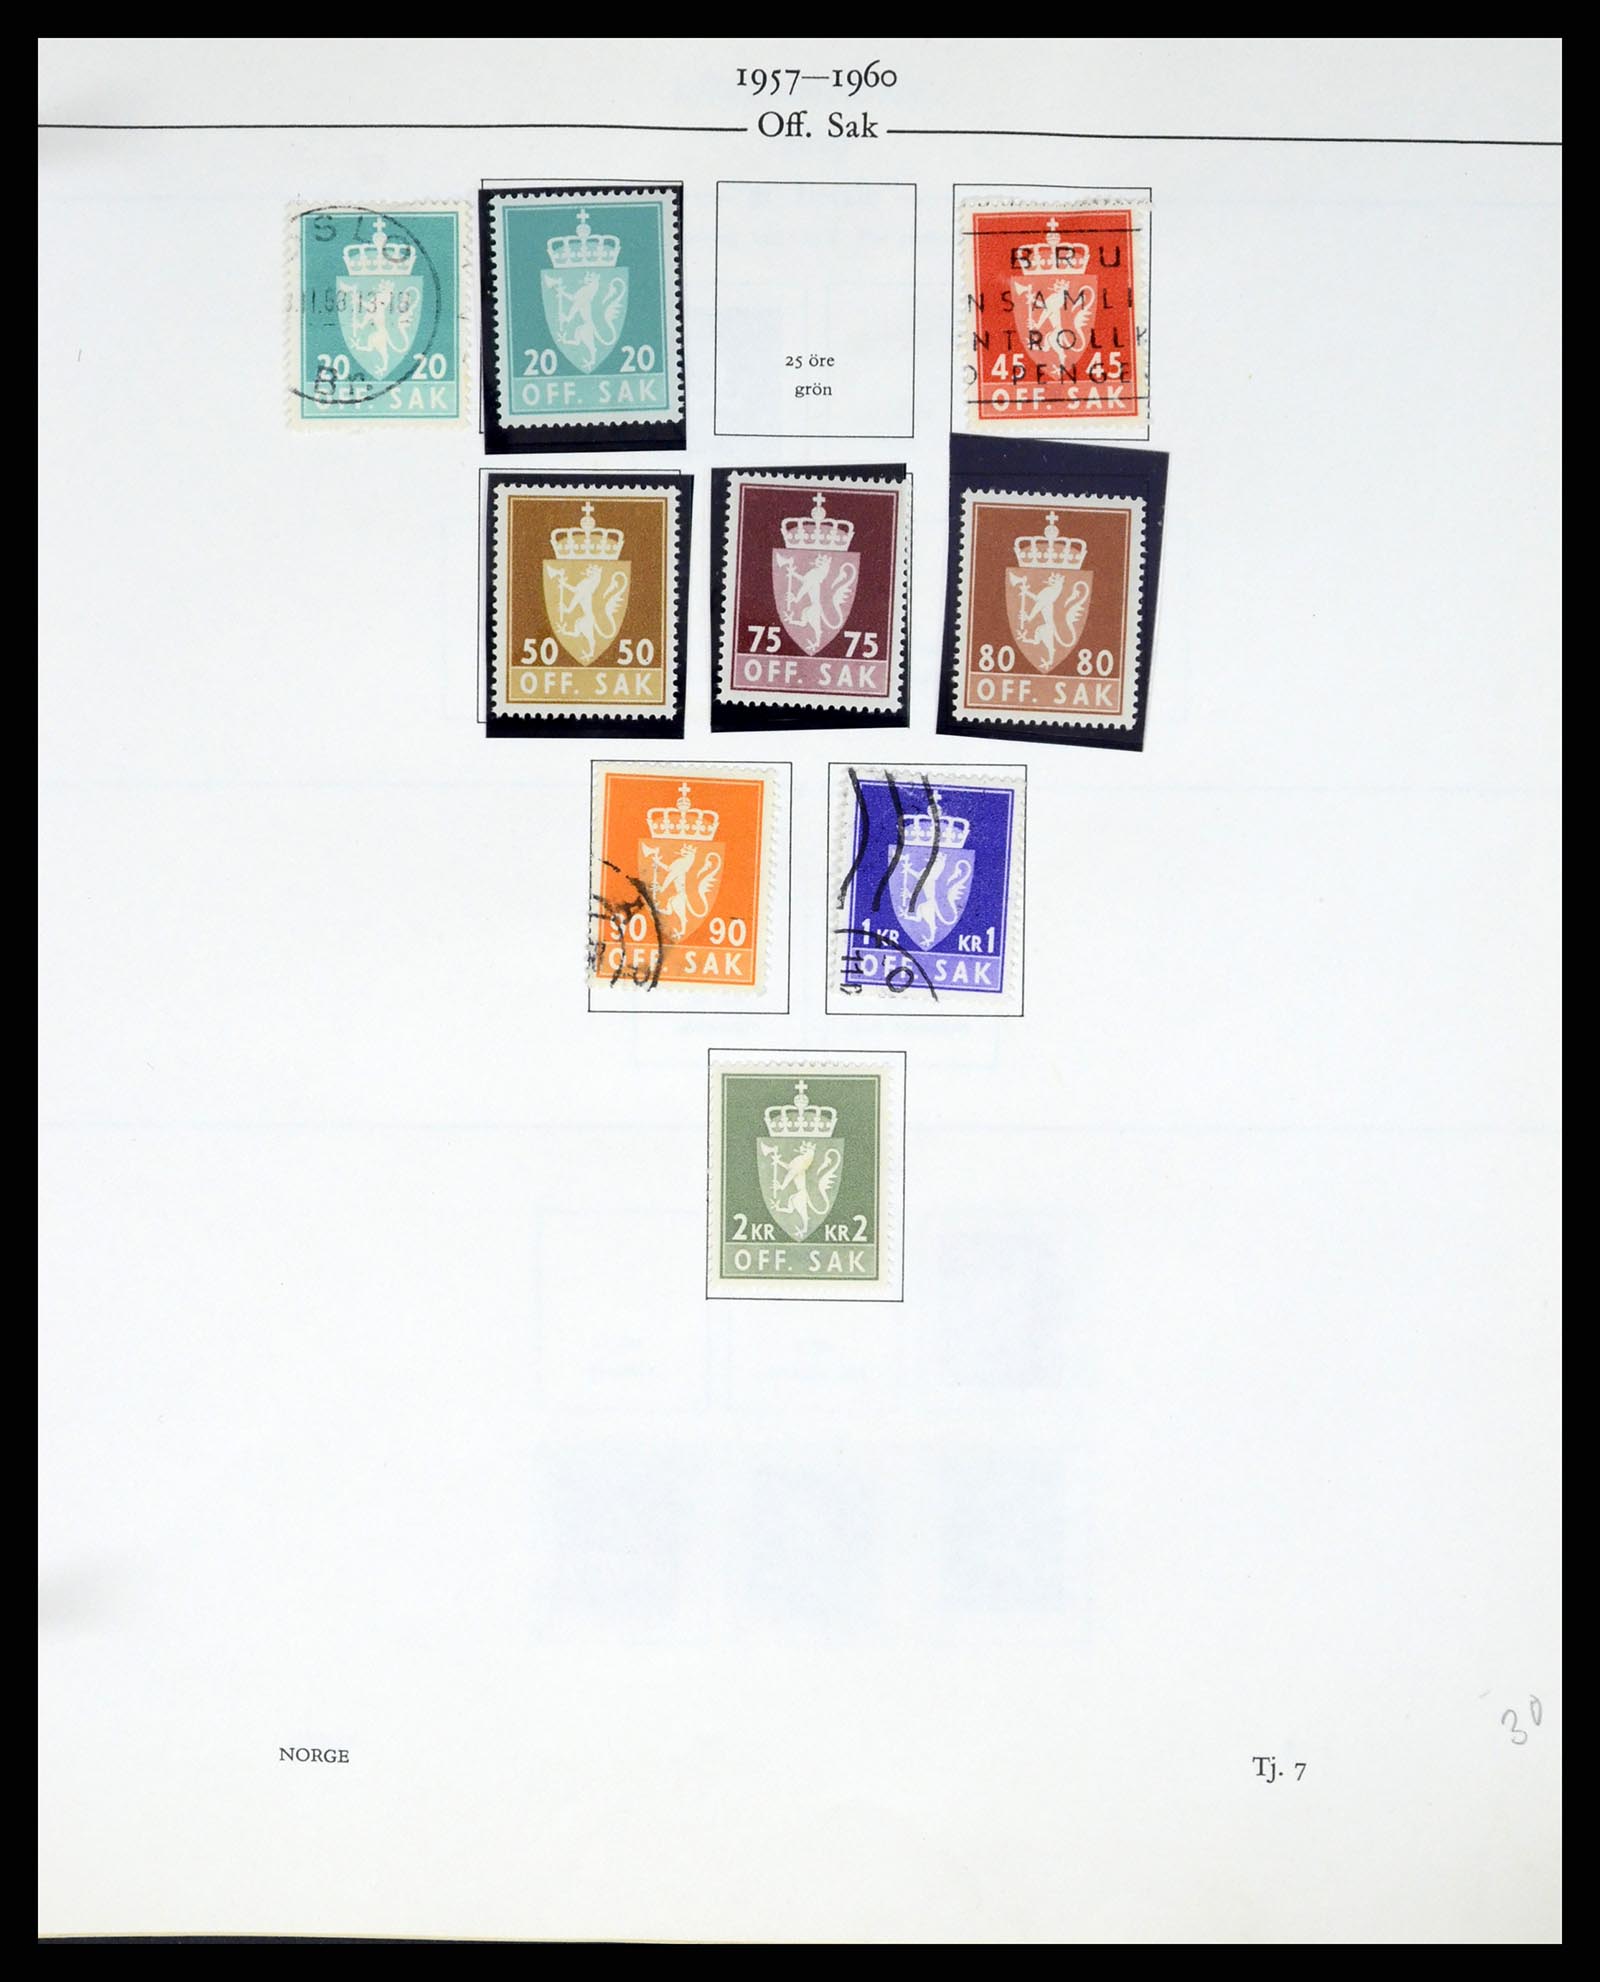 37387 050 - Stamp collection 37387 Scandinavia 1851-1960.